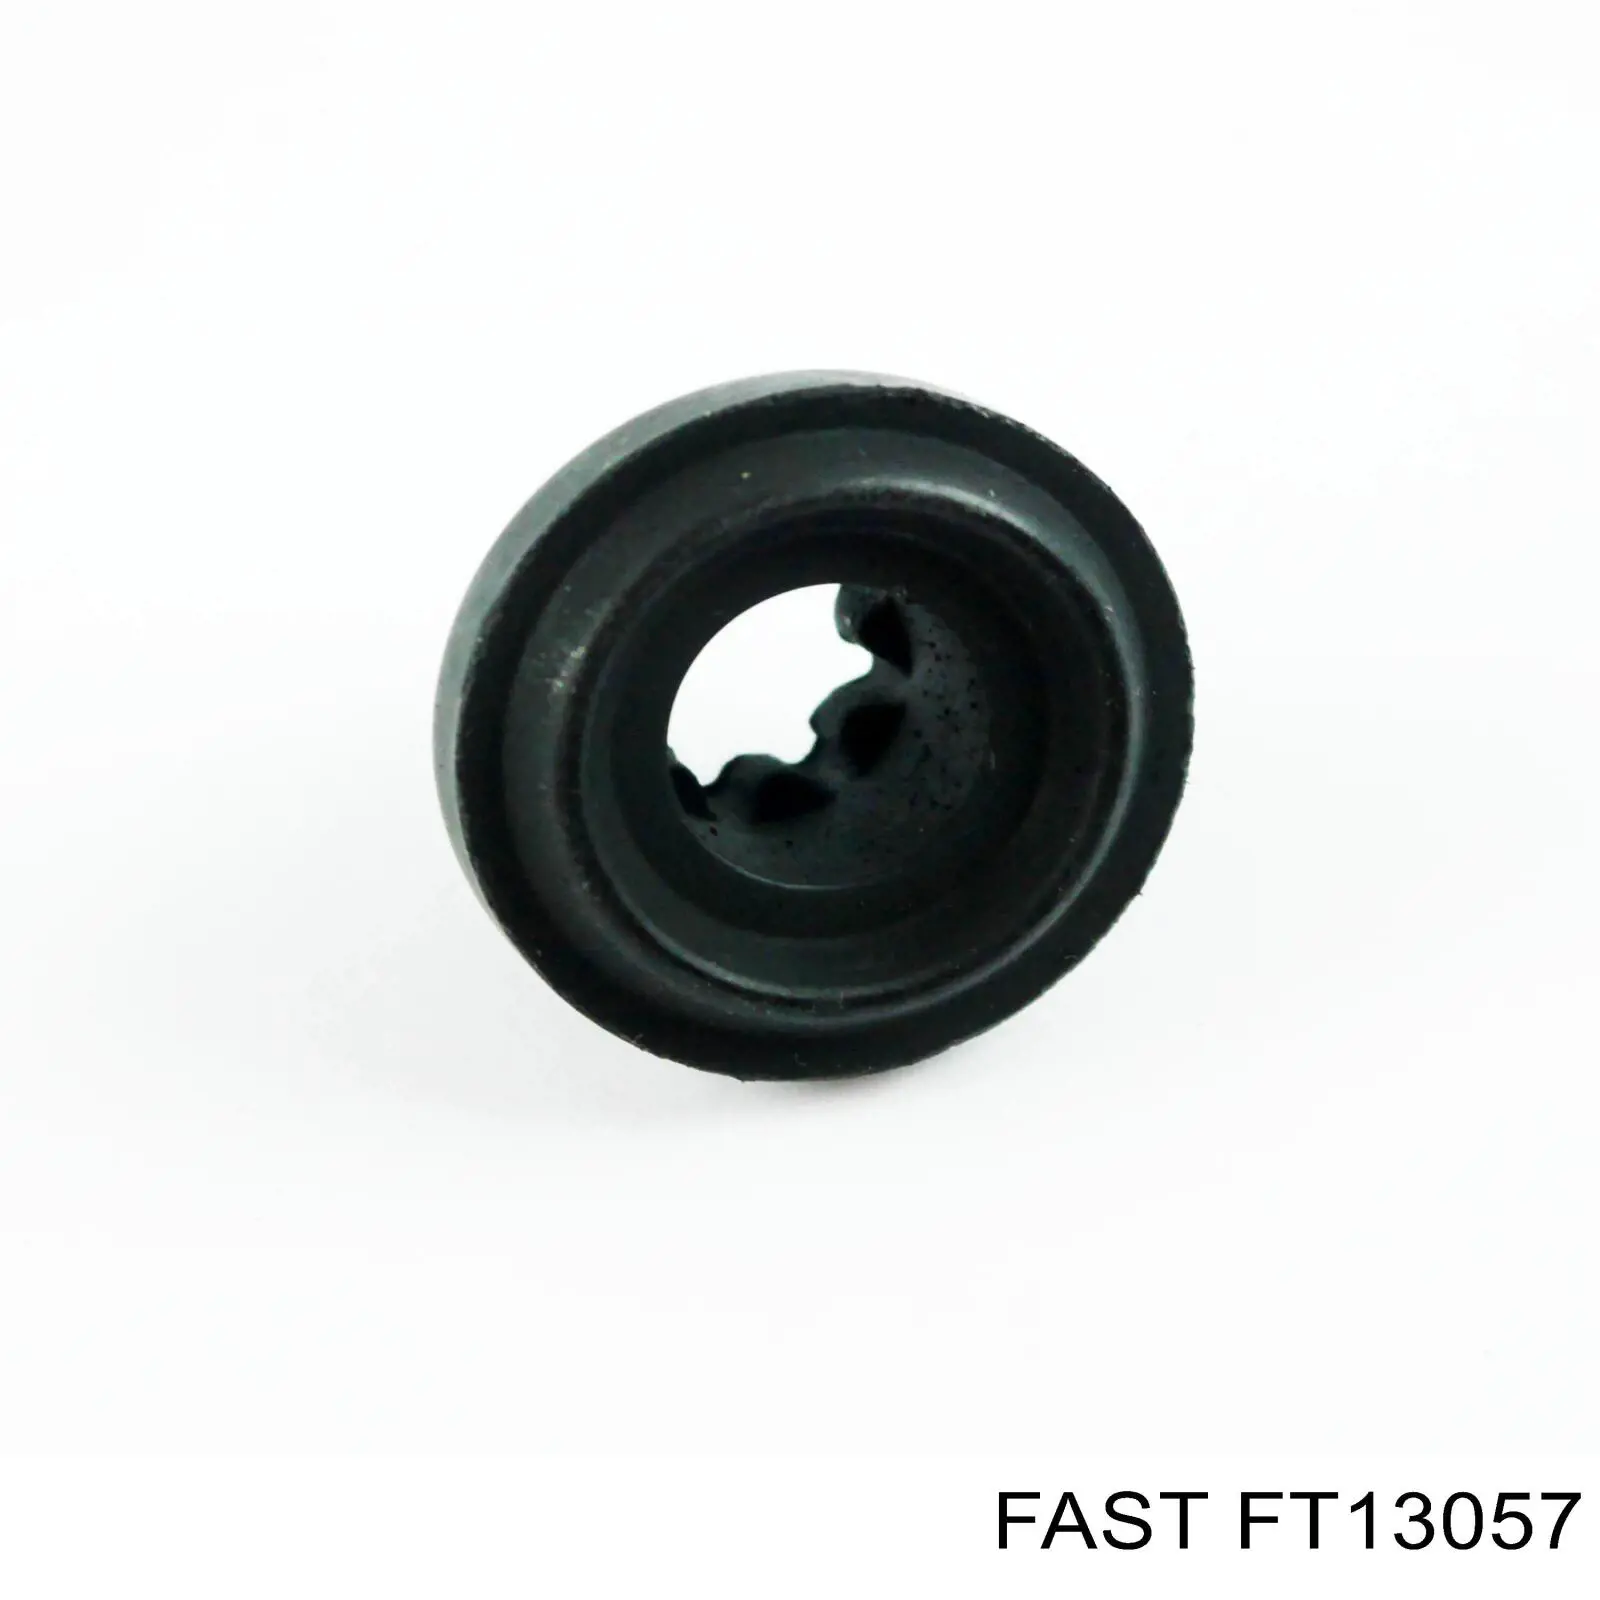 FT13057 Fast tapa valvula tampon de goma